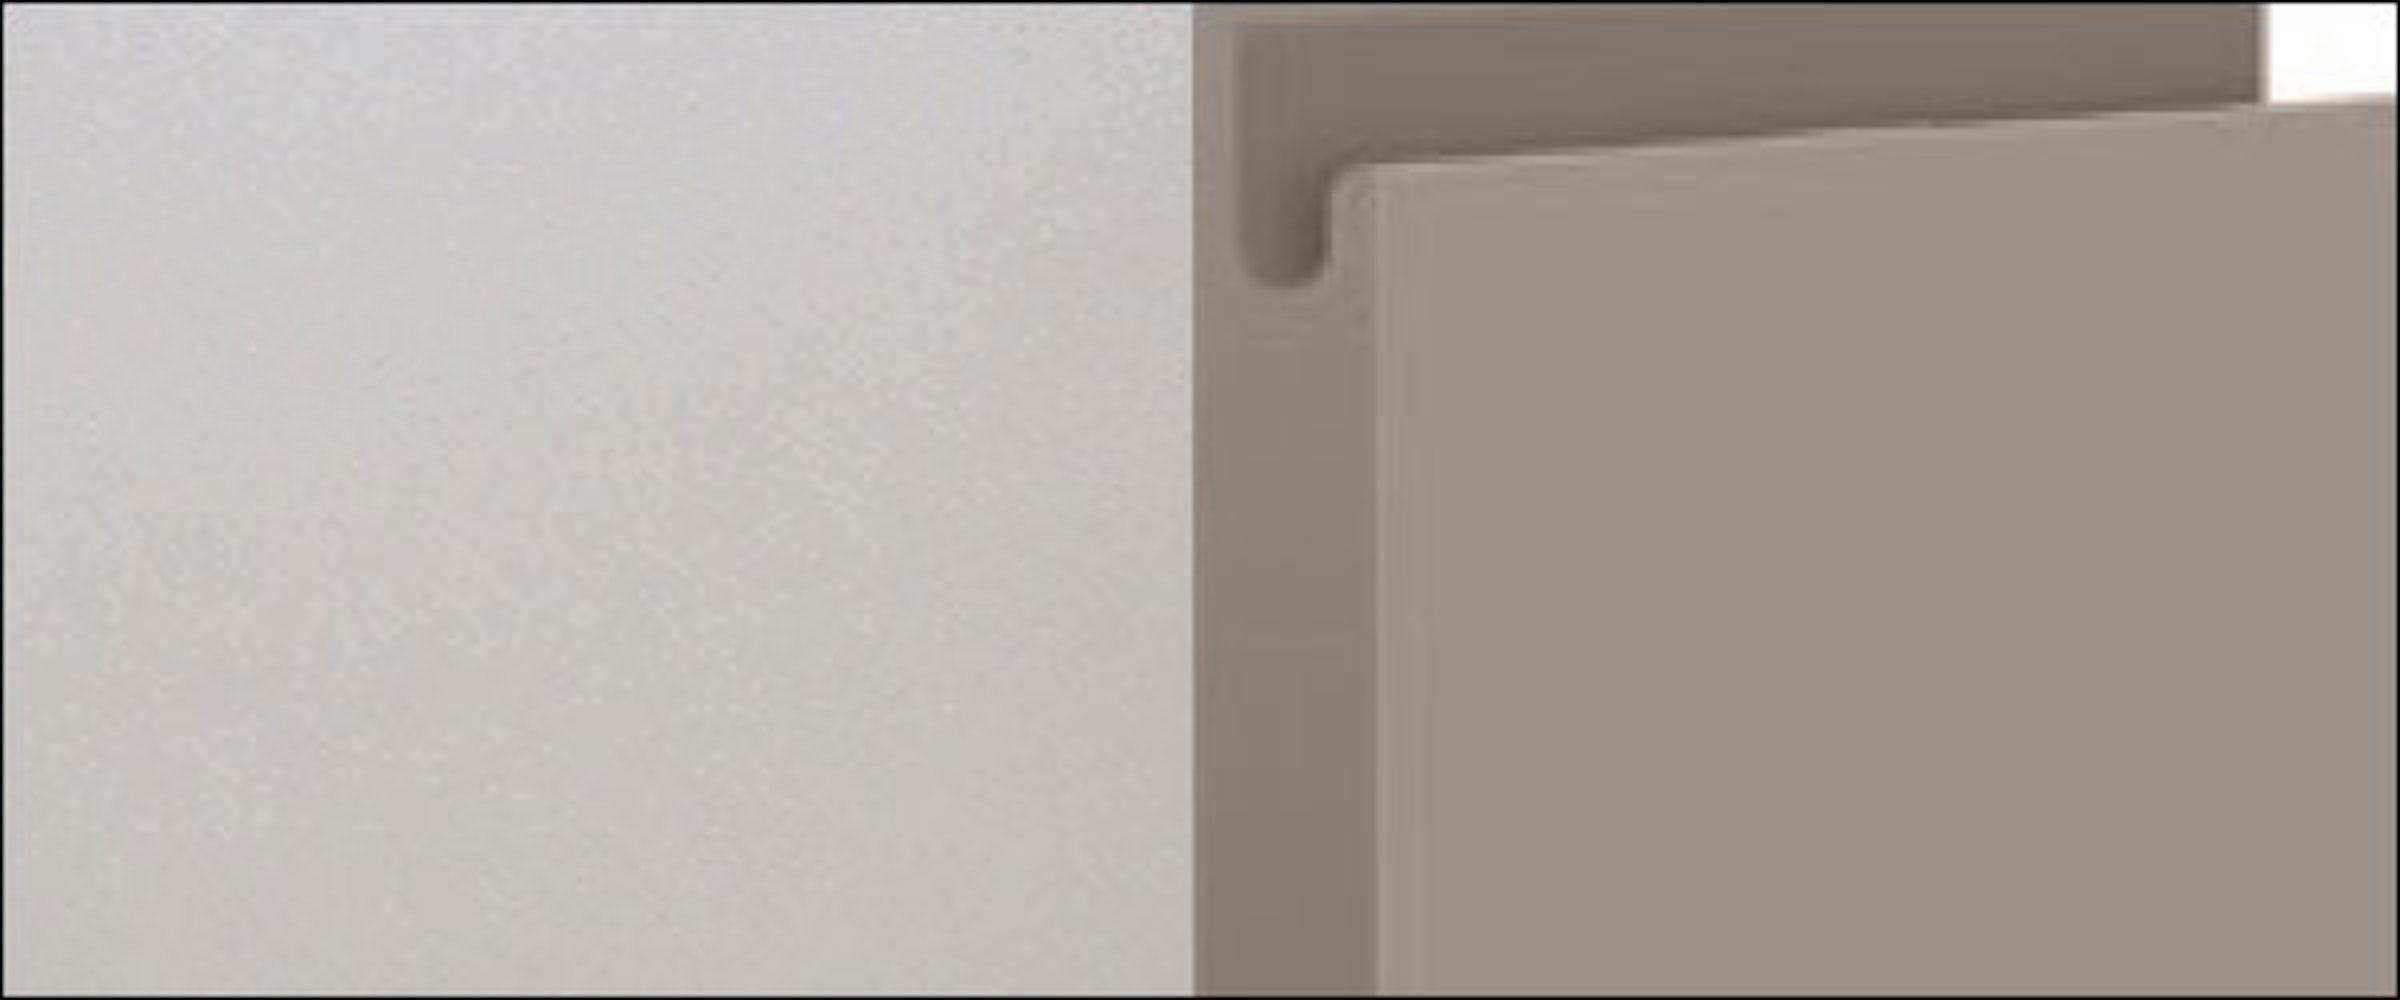 wählbar Front- grey Spülenunterschrank (Teilauszug) & 1 Acryl stone Avellino grifflos Schublade matt 80cm Korpusfarbe Feldmann-Wohnen